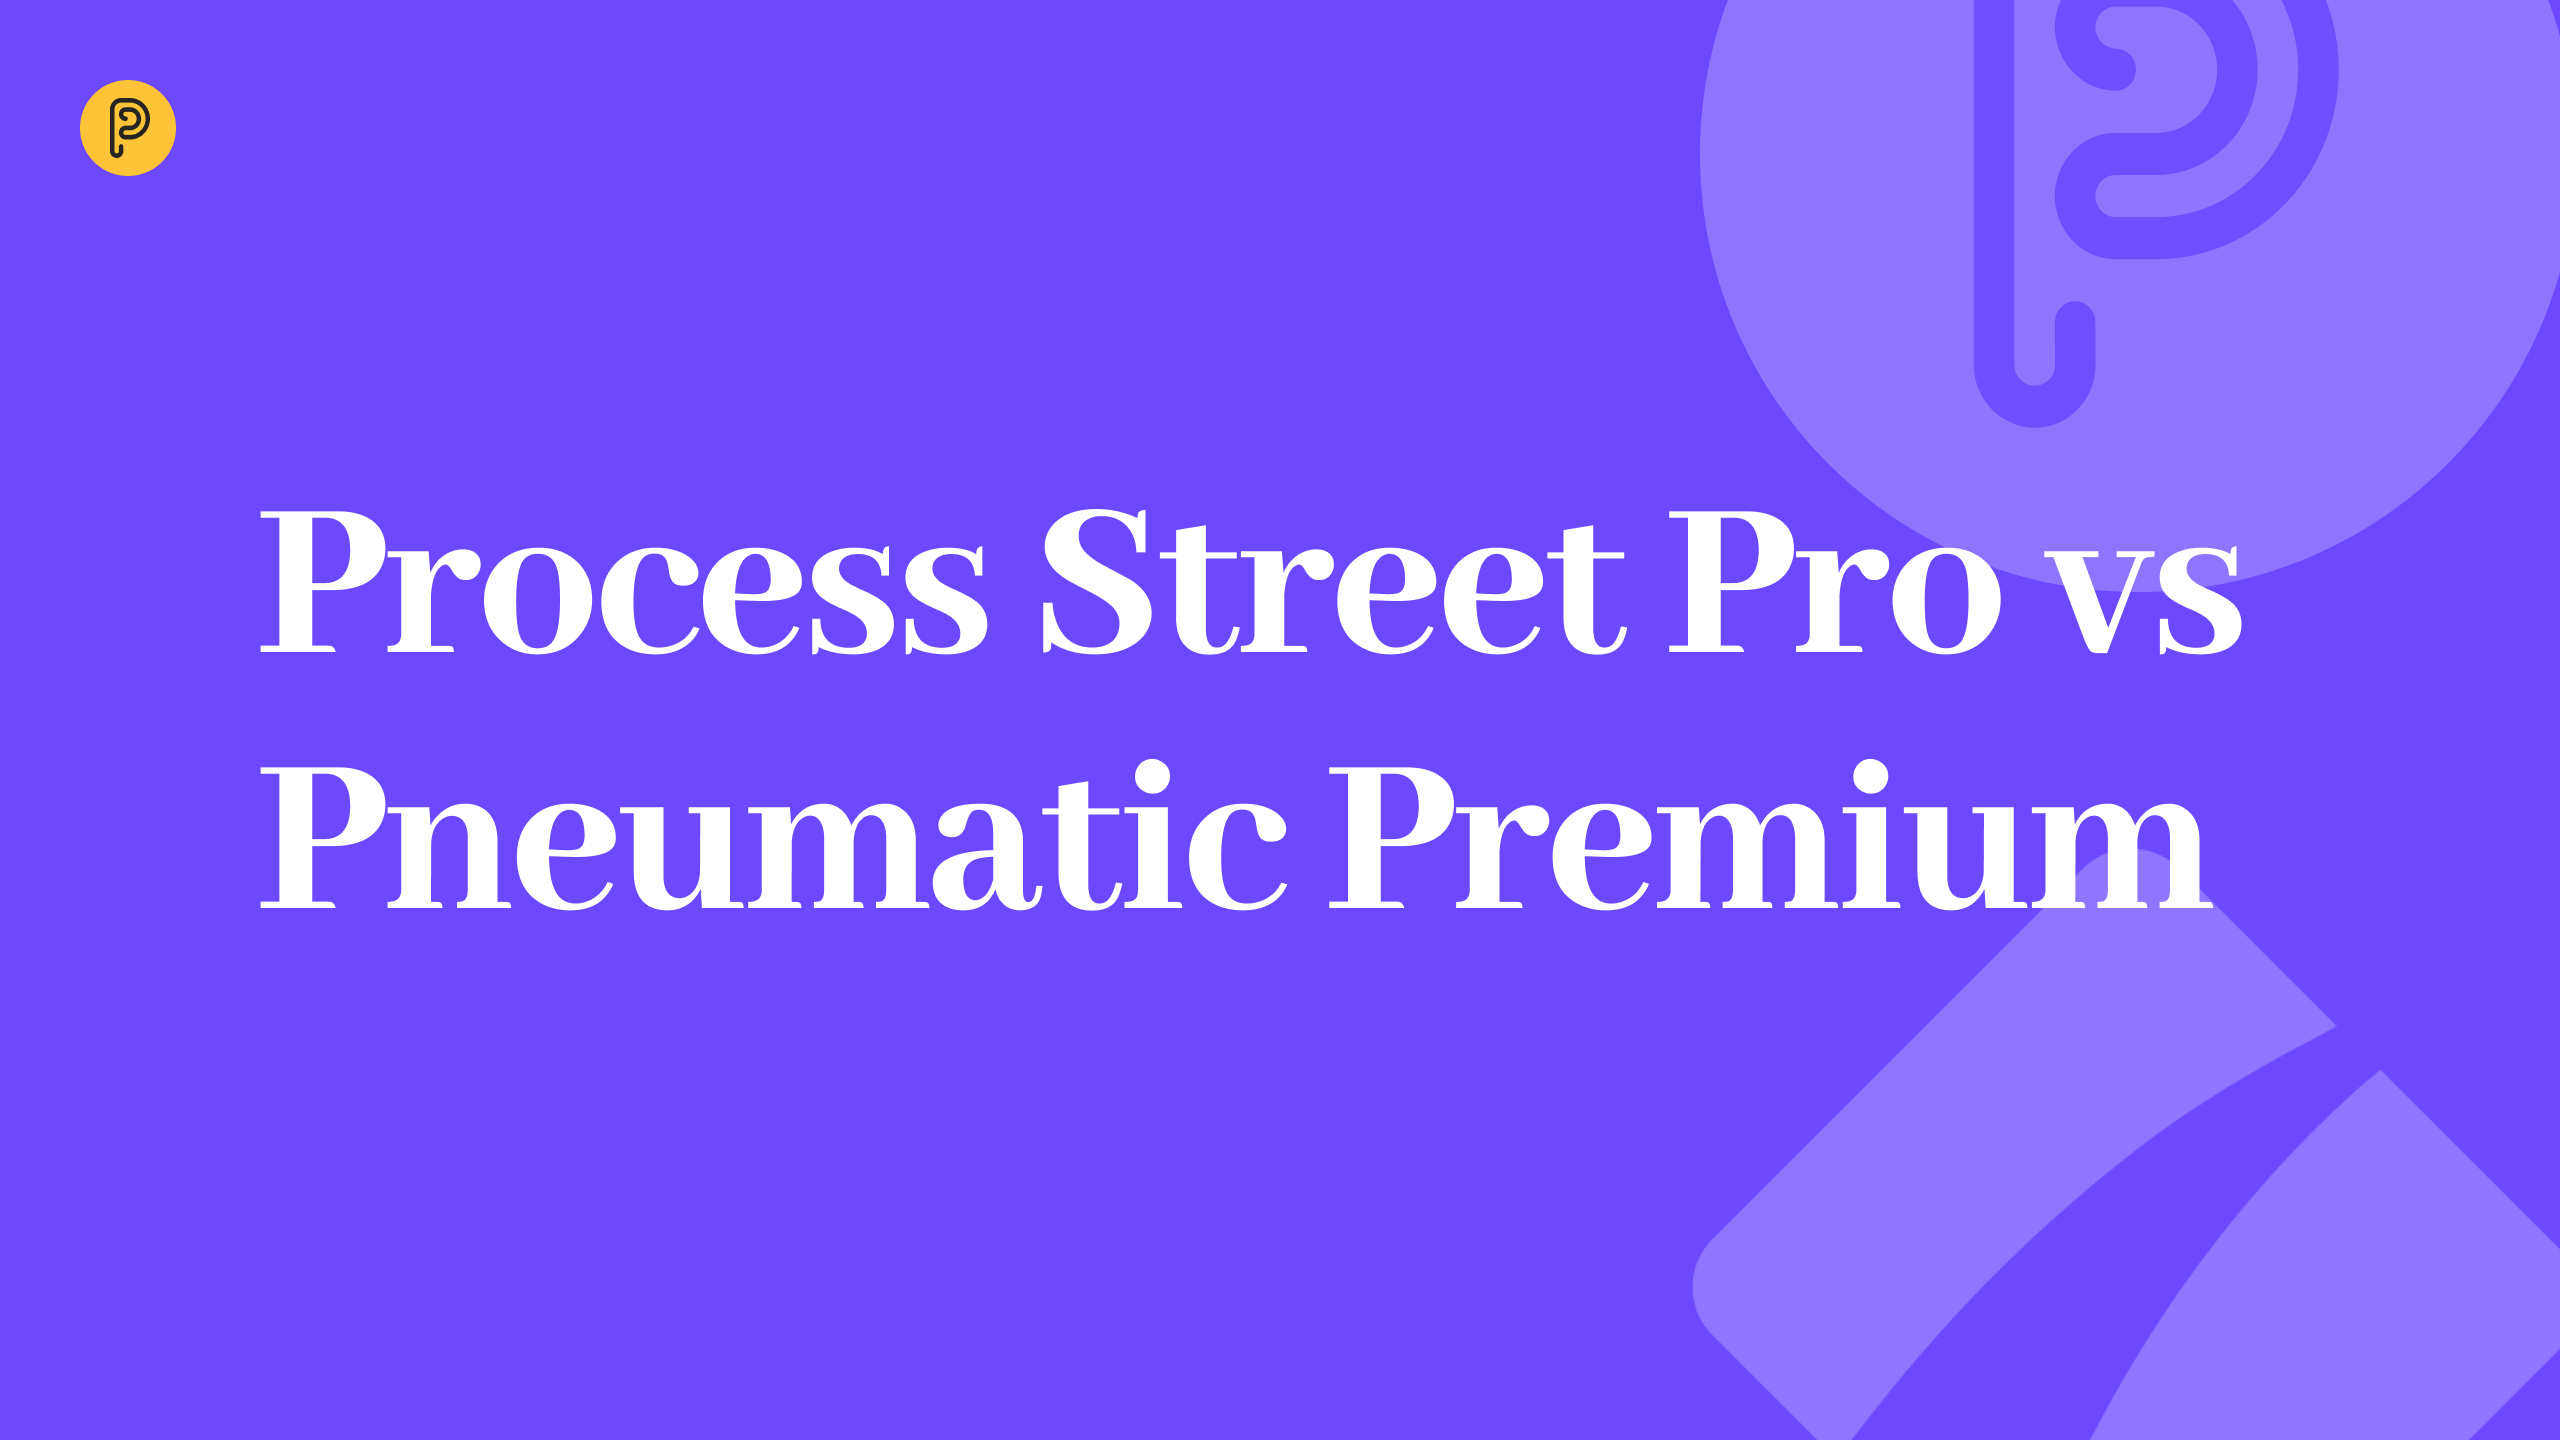 Pneumatic Premium vs Process Street Pro